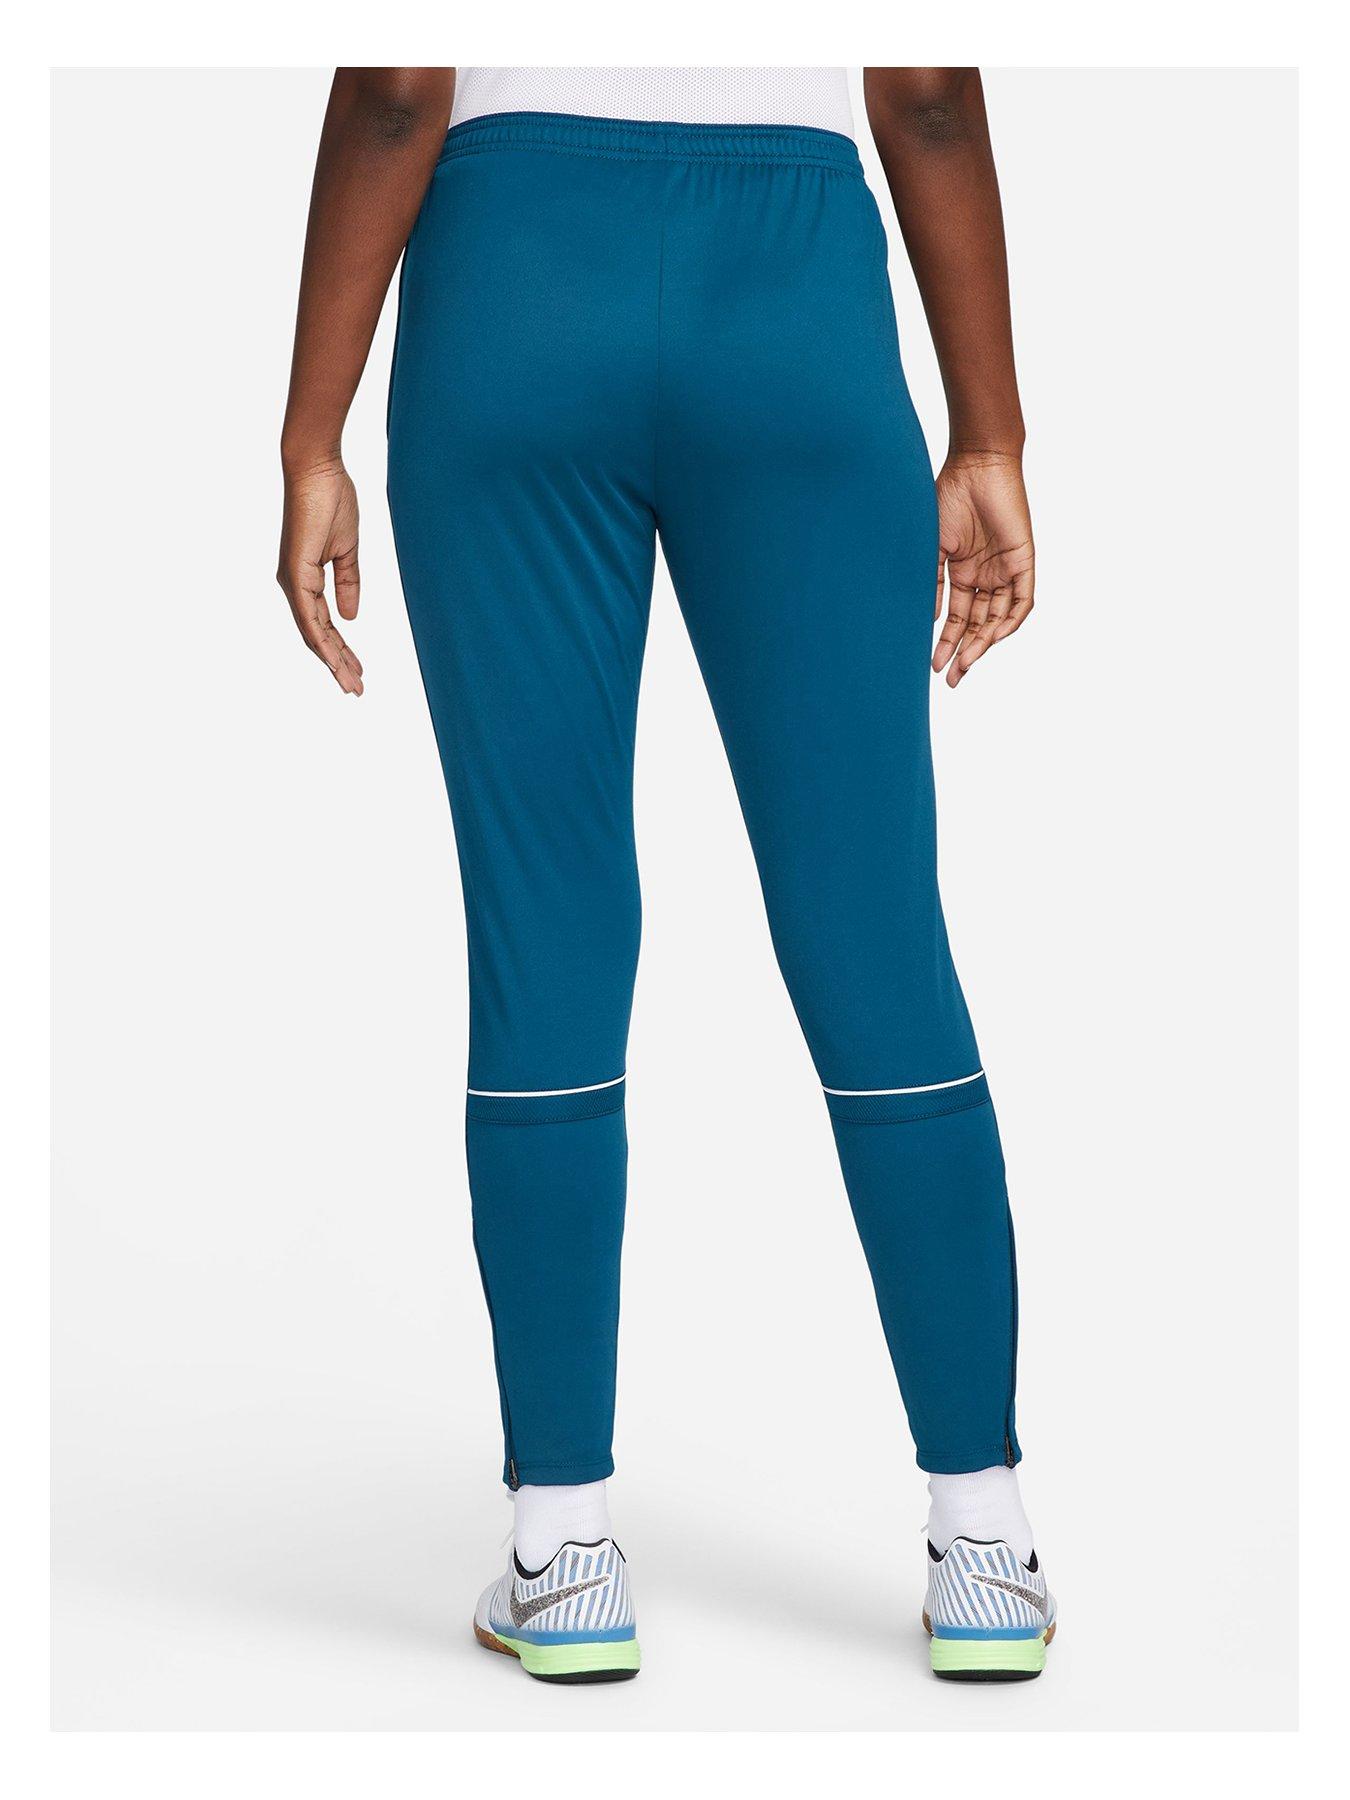 Nike Womens Dri-fit Academy Pant Kpz - Br 21 - Blue